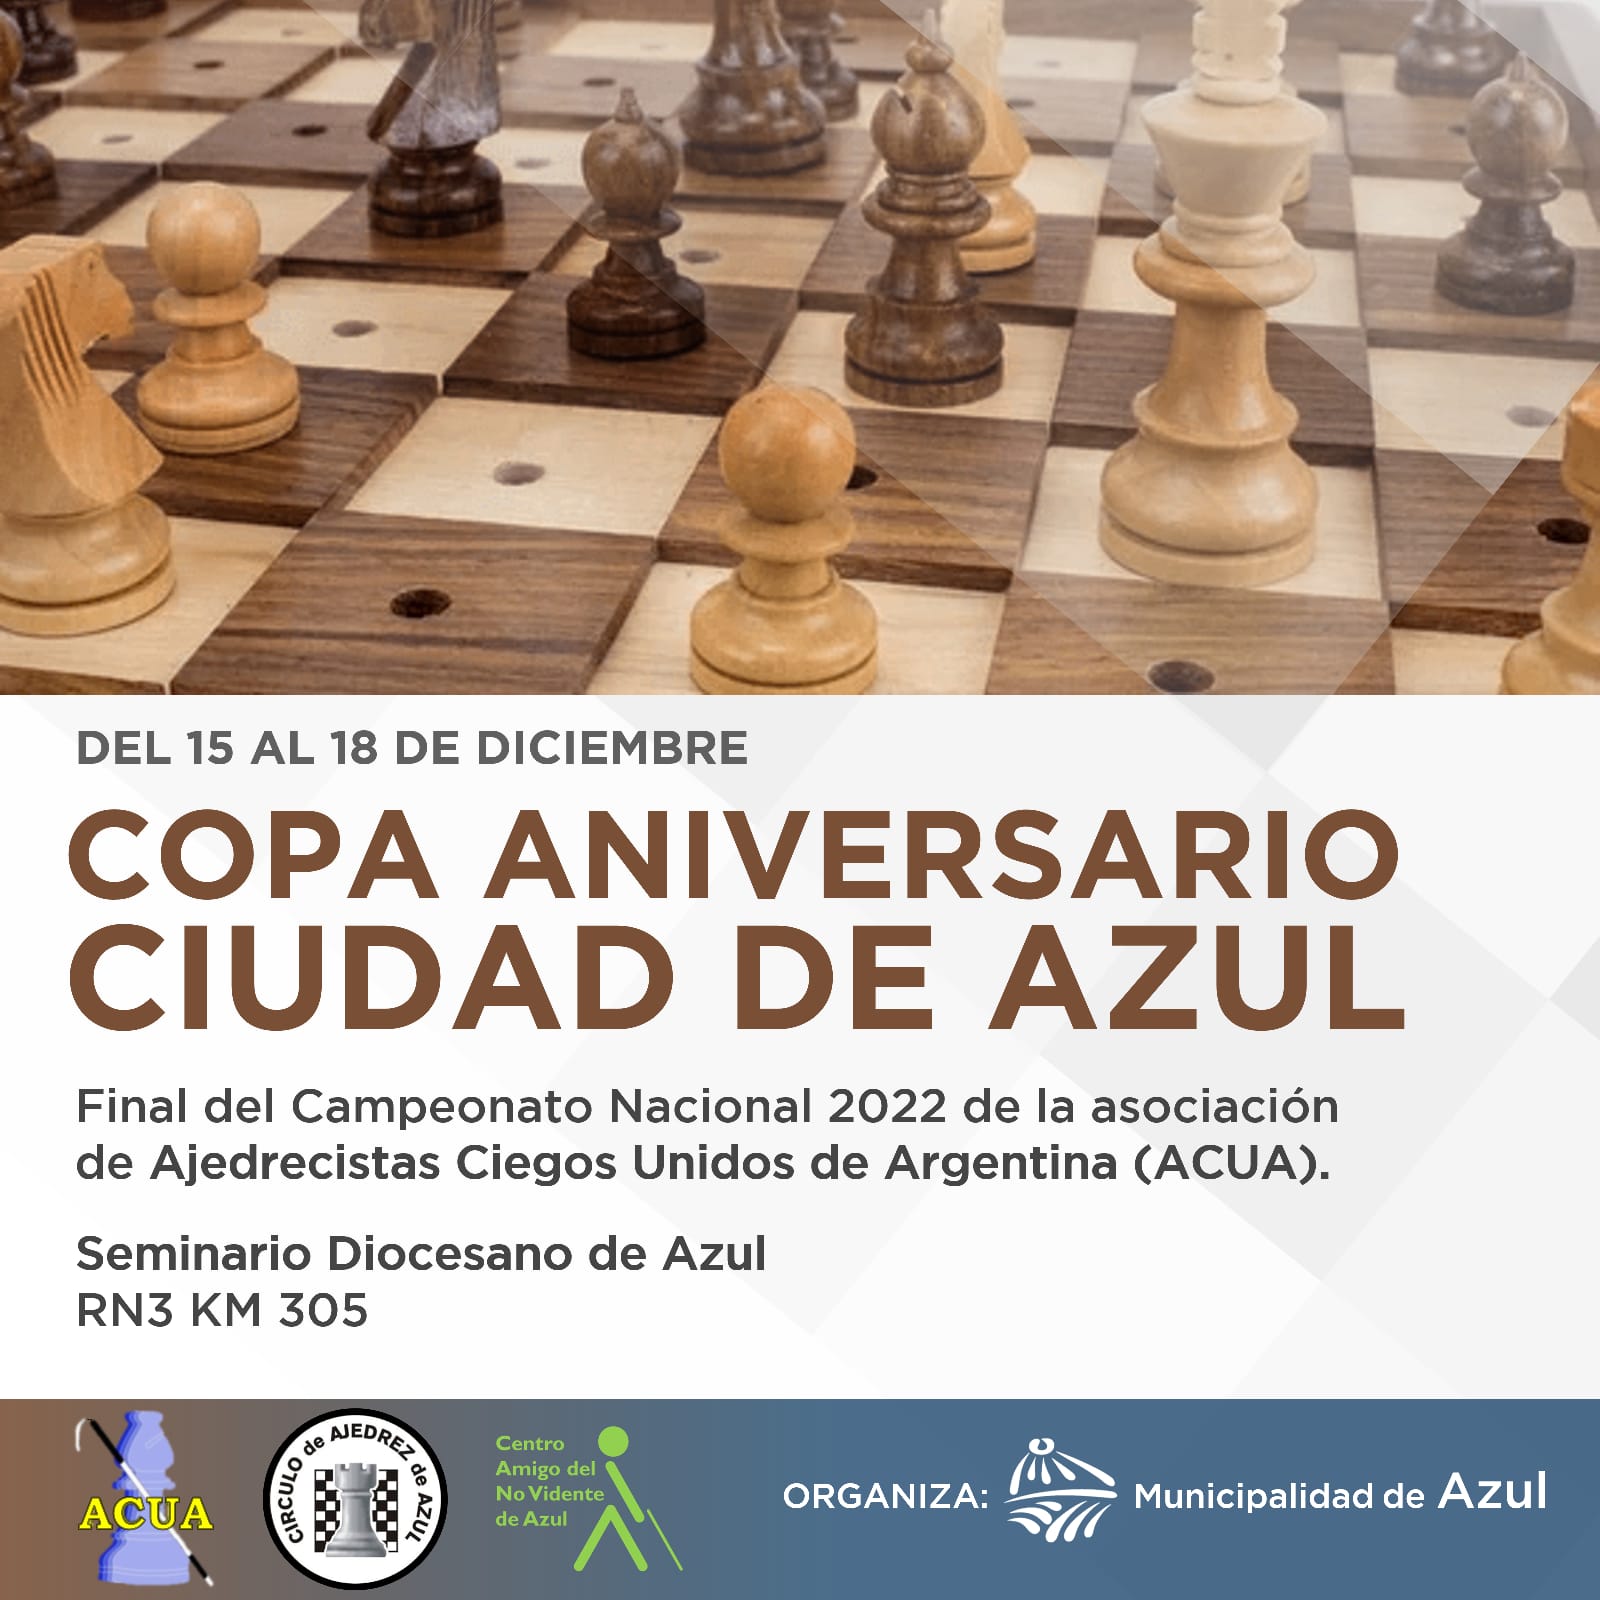 Torneo de Ajedrez Online – CENTRO REGIONAL UNIVERSITARIO CORDOBA IUA